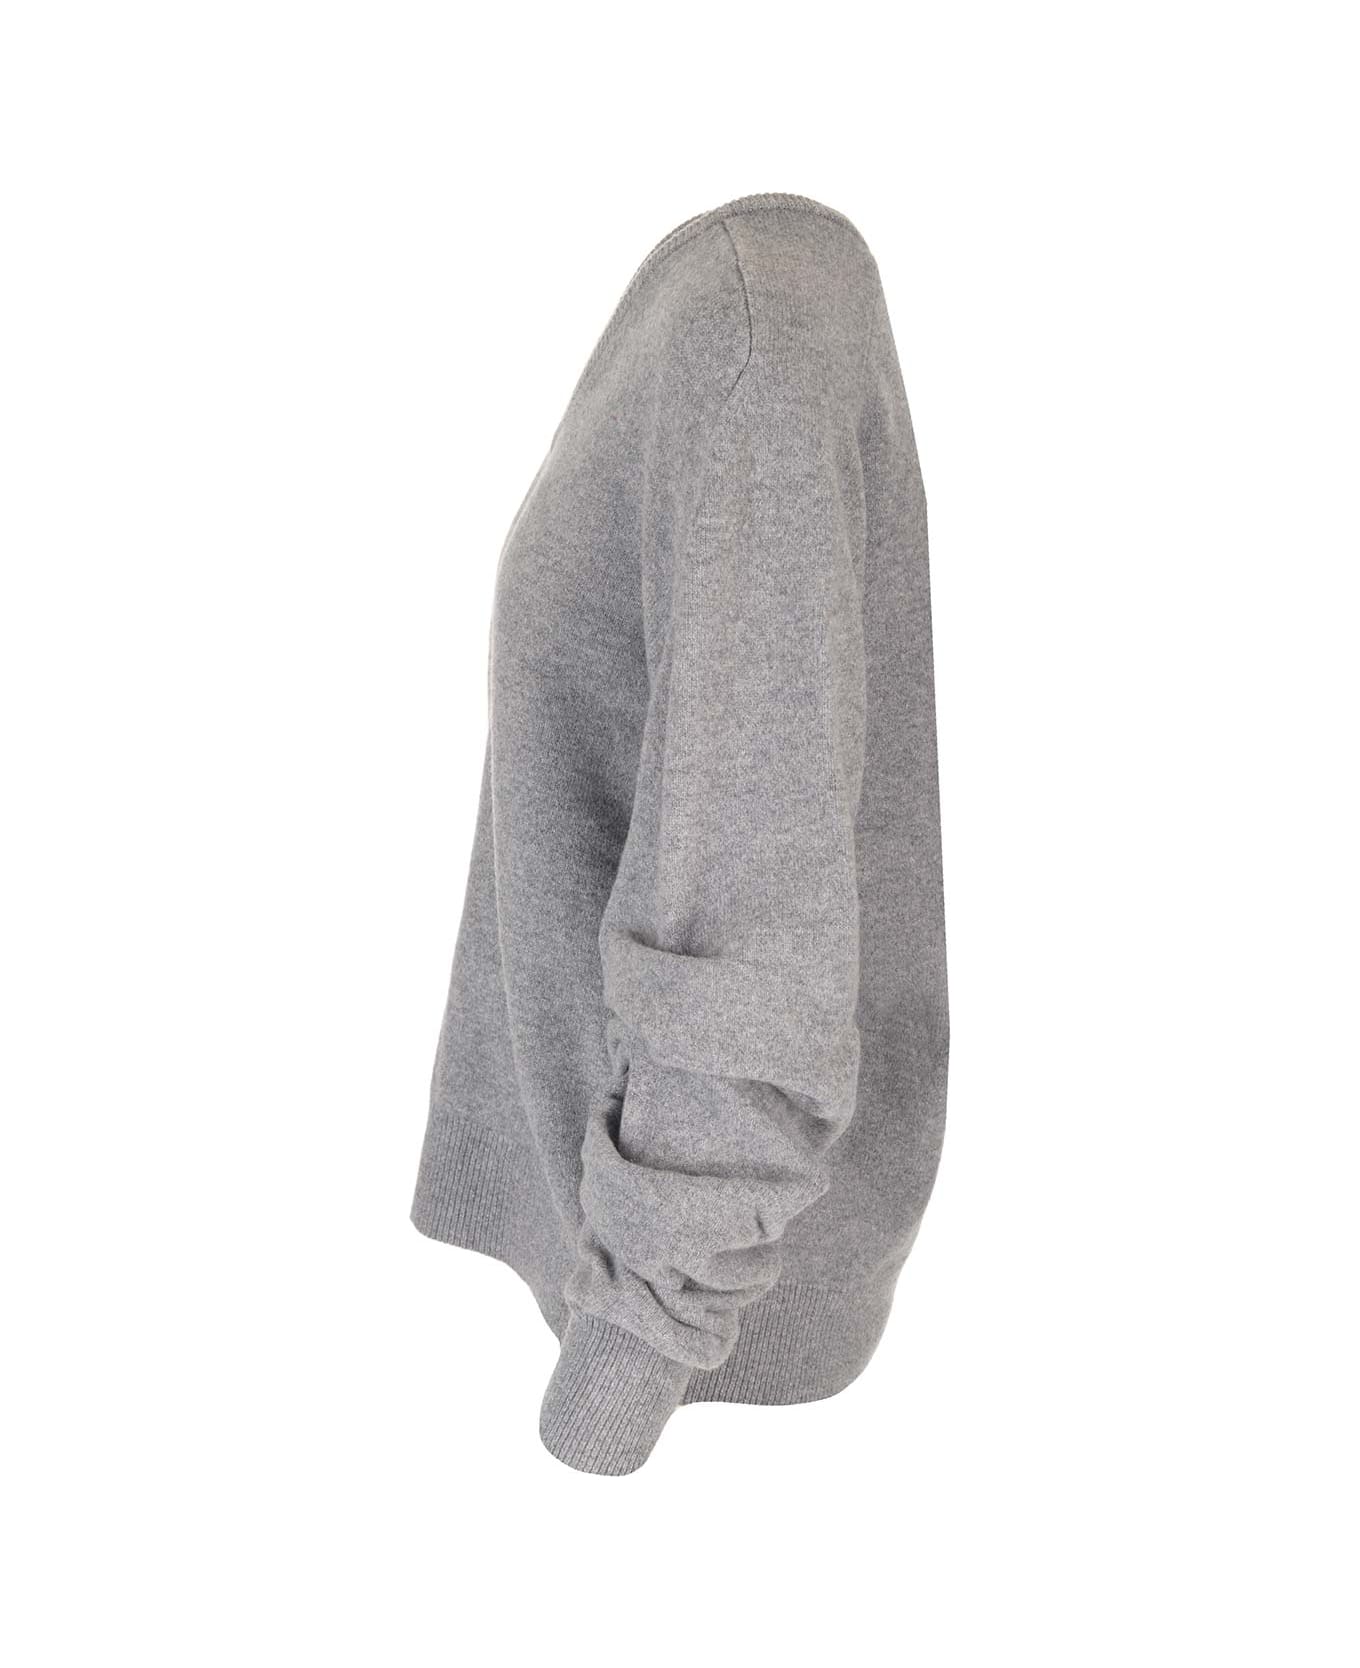 Tory Burch Gathered Sleeves Sweater - Grey ニットウェア